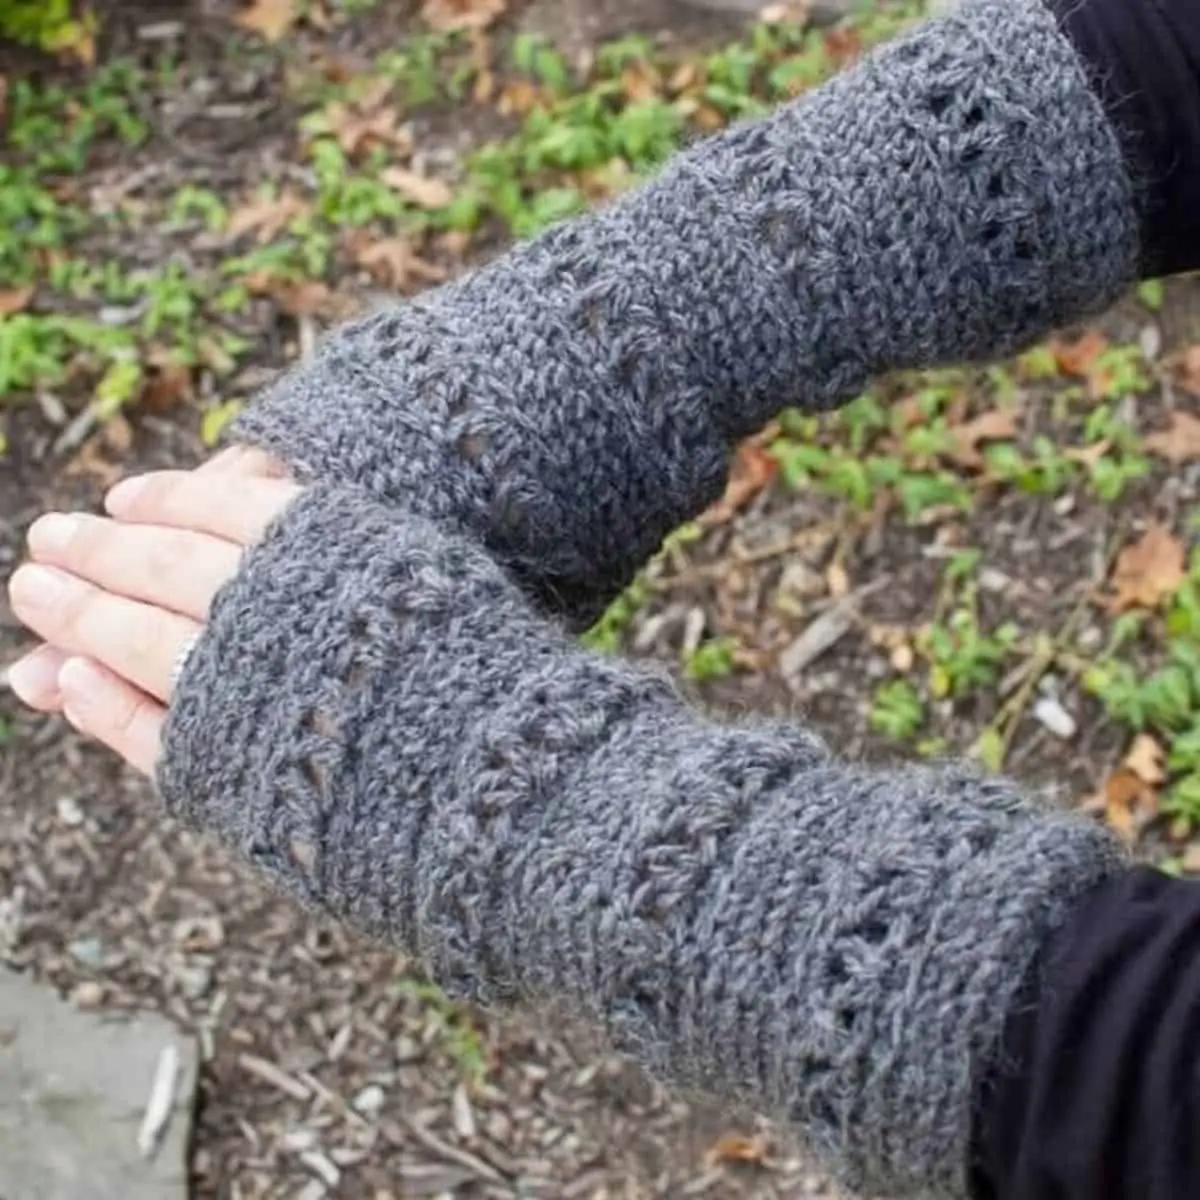 gray crochet wrist warmers being worn